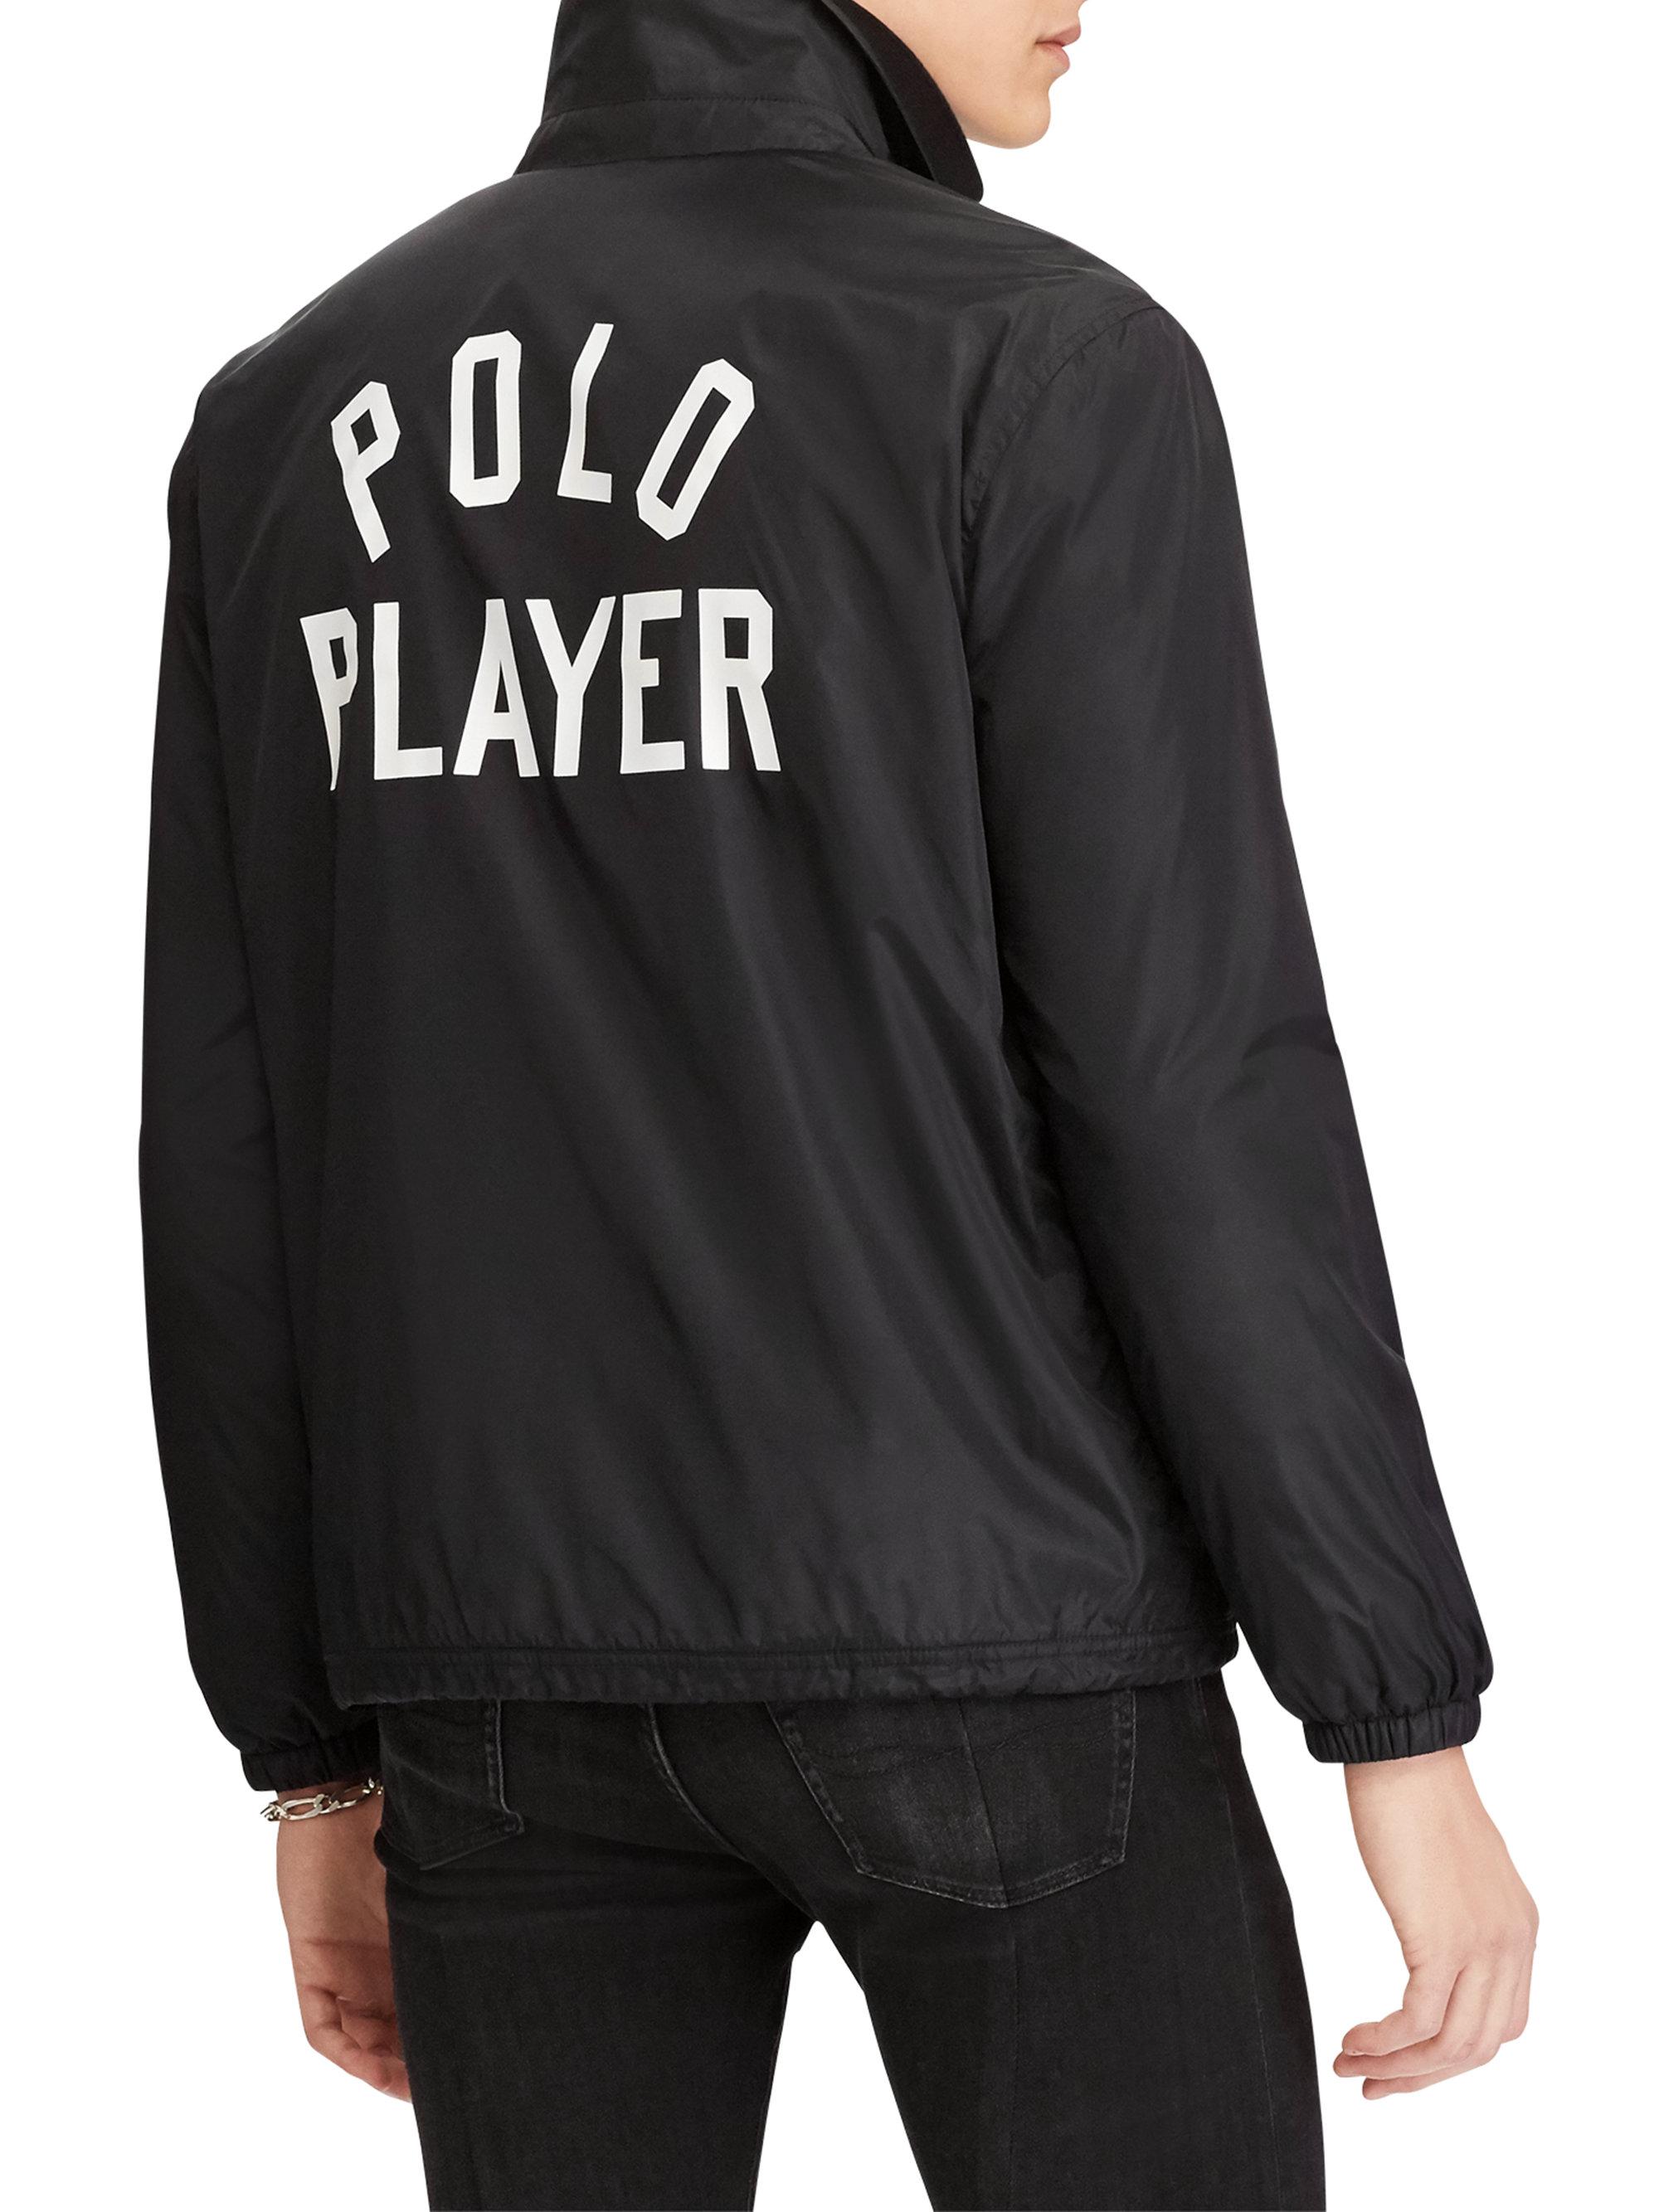 buy \u003e polo player jacket, Up to 63% OFF